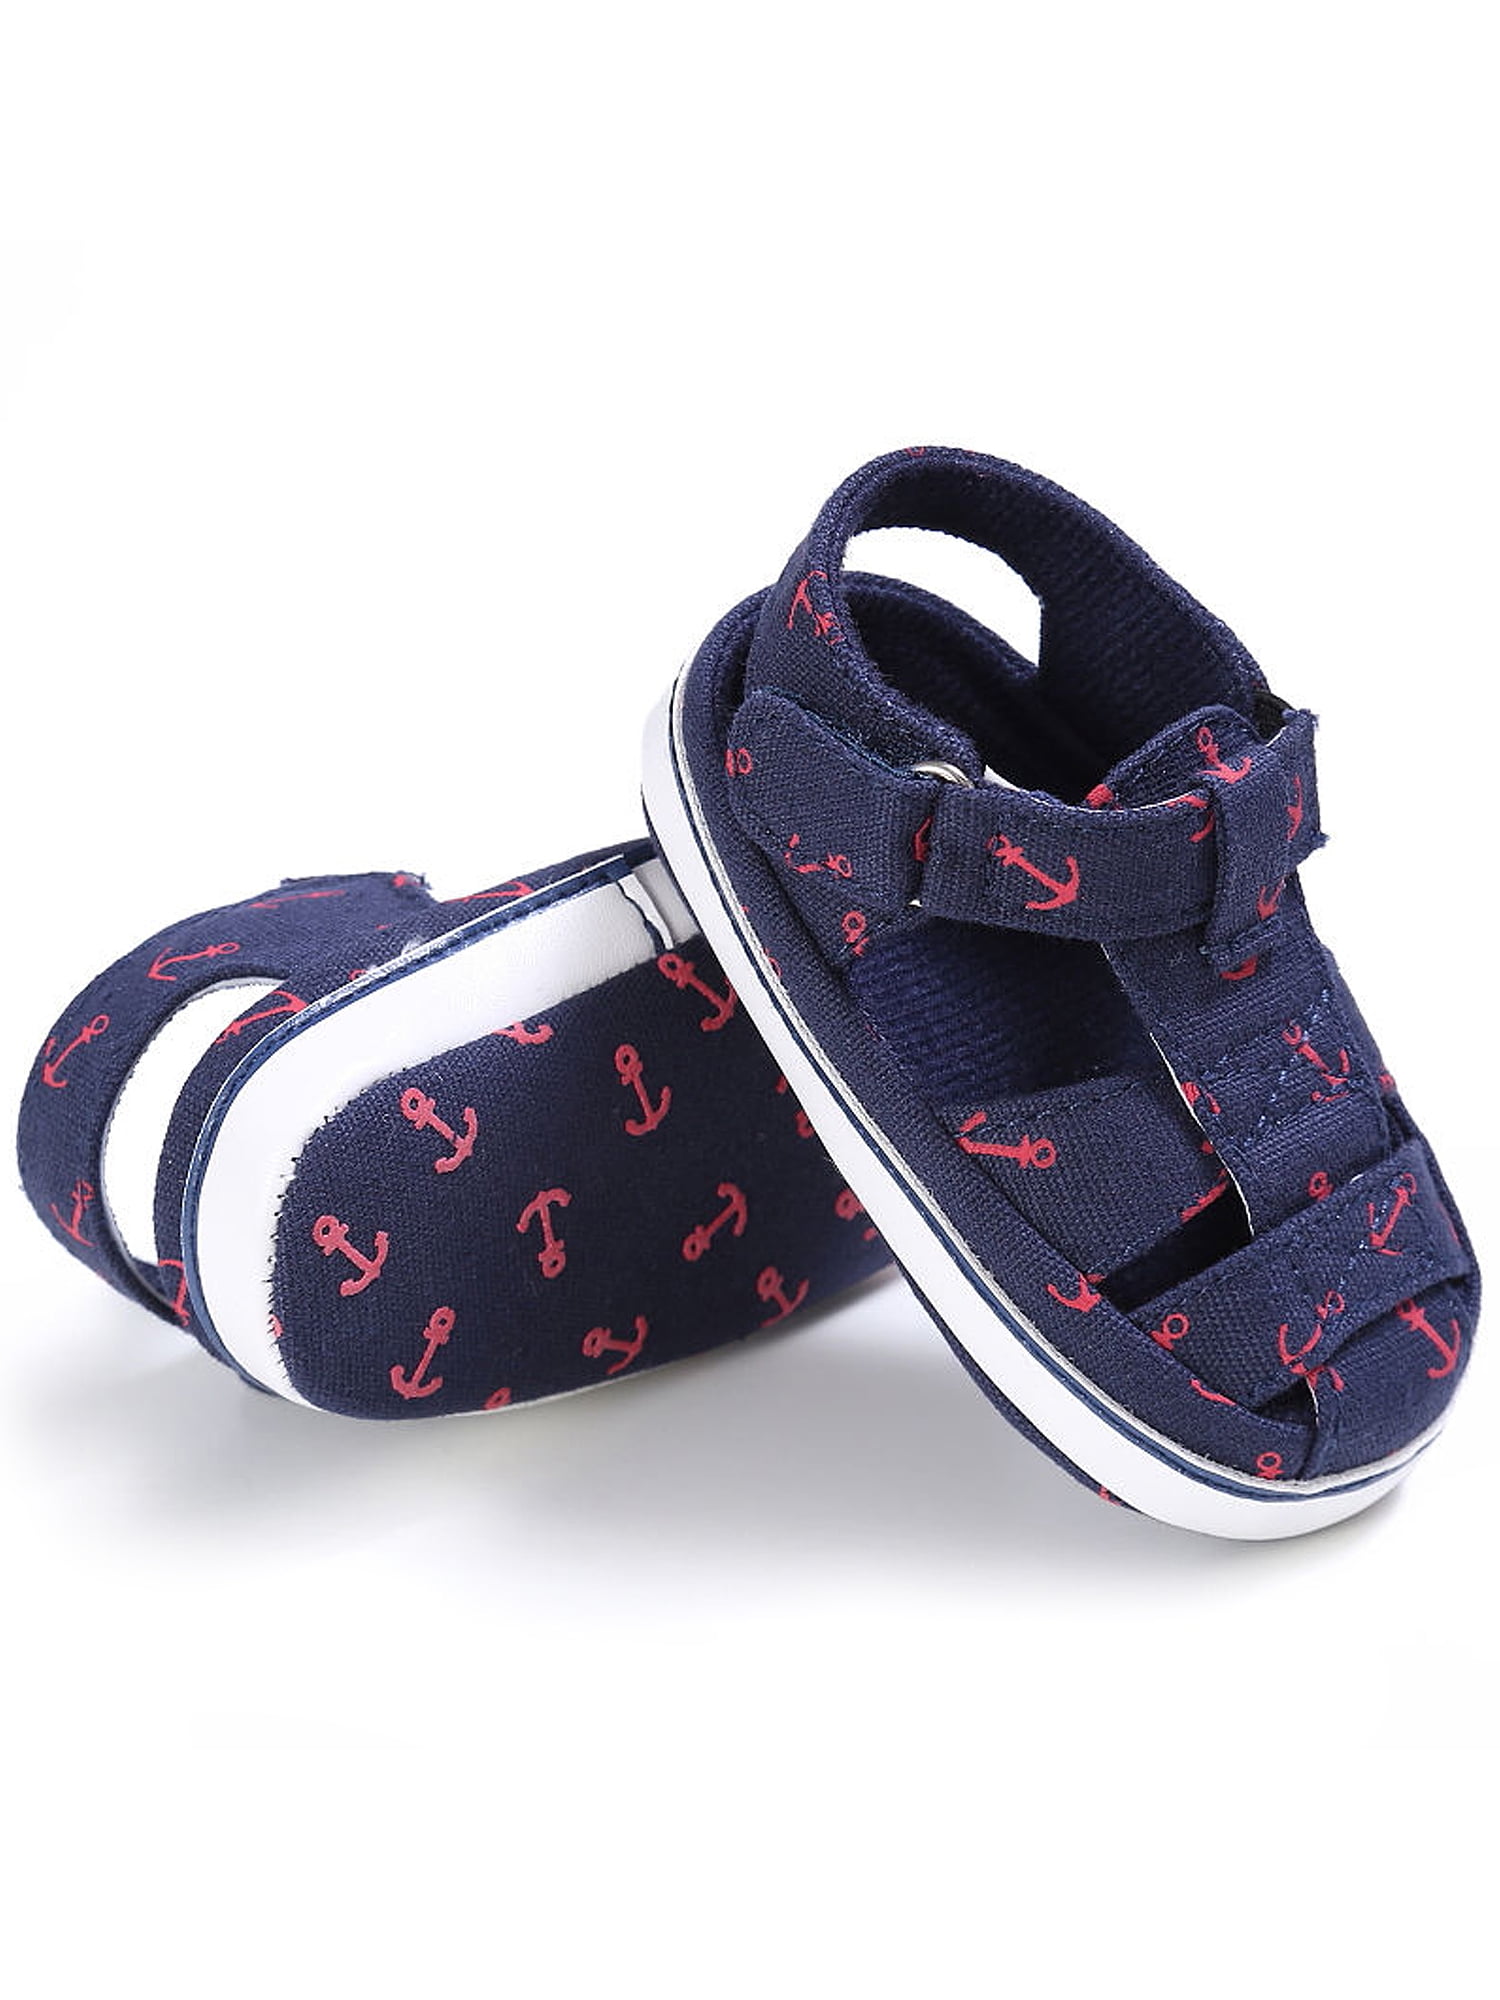 Summer Sandals Baby Boys Girls Infant Soft Crib Shoes  Moccasins Shoes  Sandals 